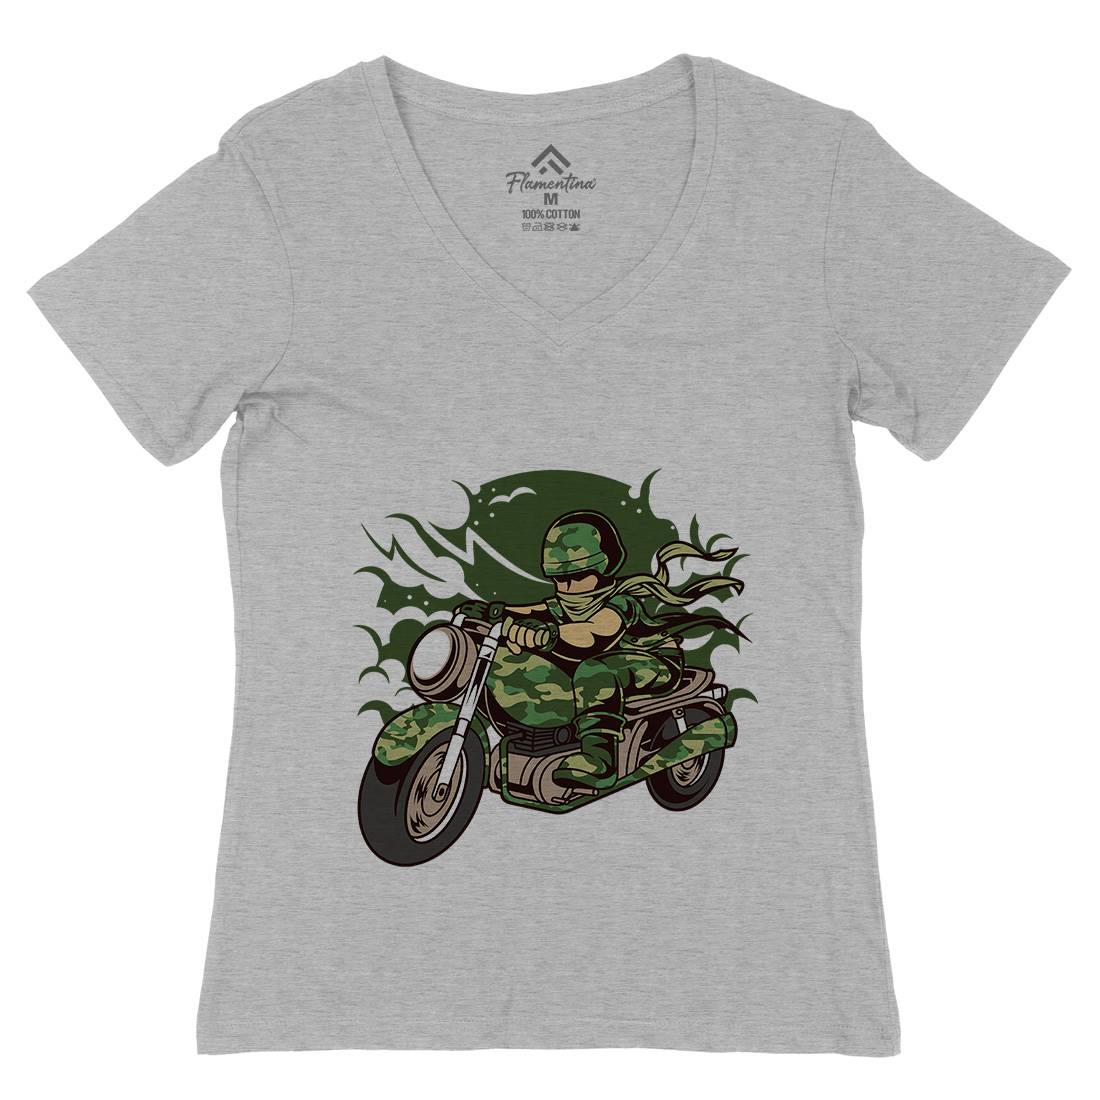 Motorcycle Ride Womens Organic V-Neck T-Shirt Army C306